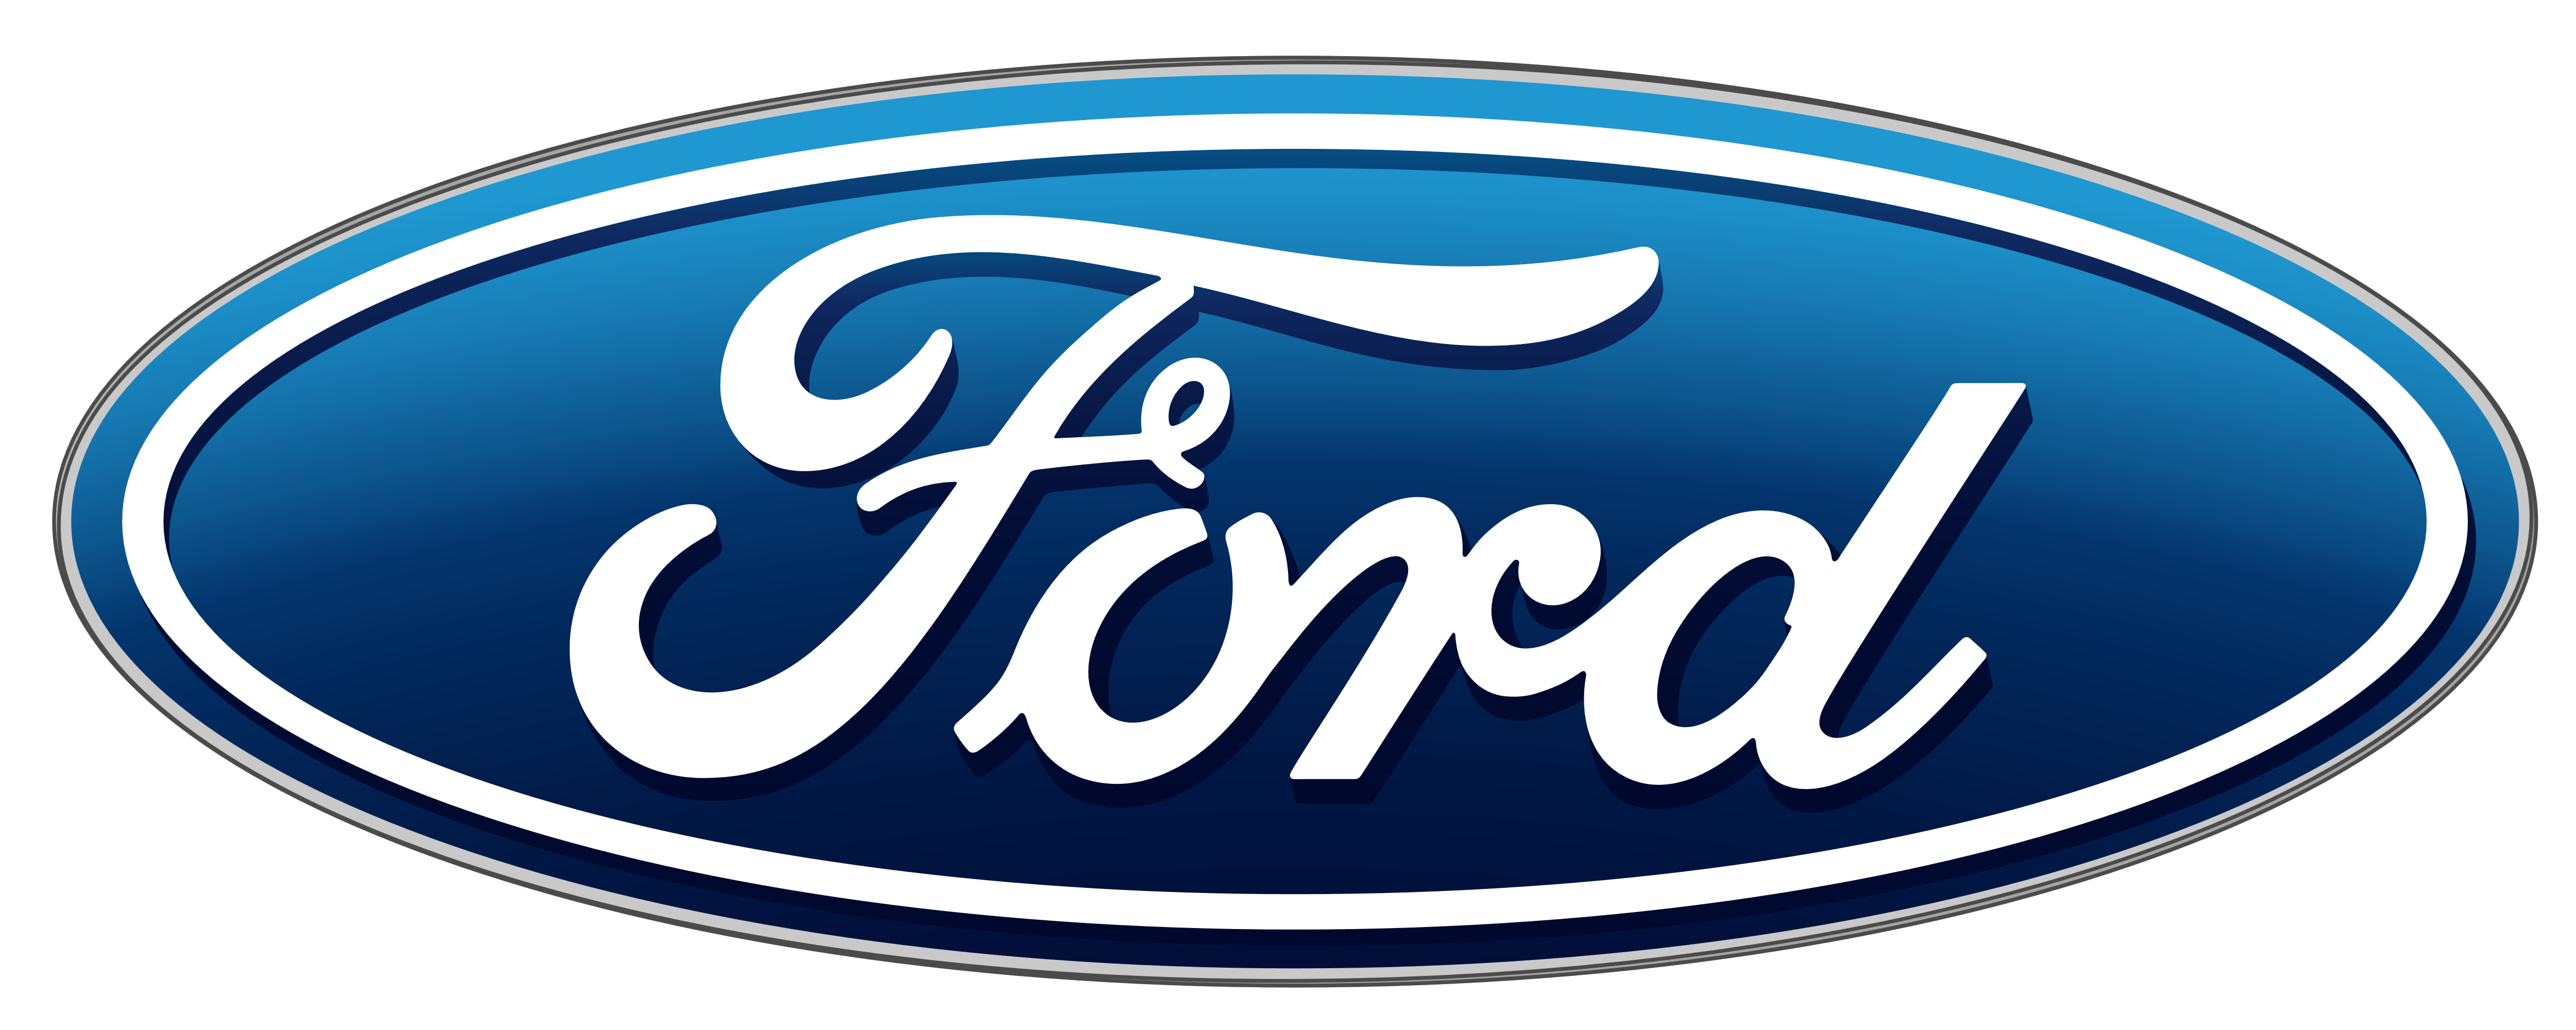 Ford_logo_motor_company_transparent